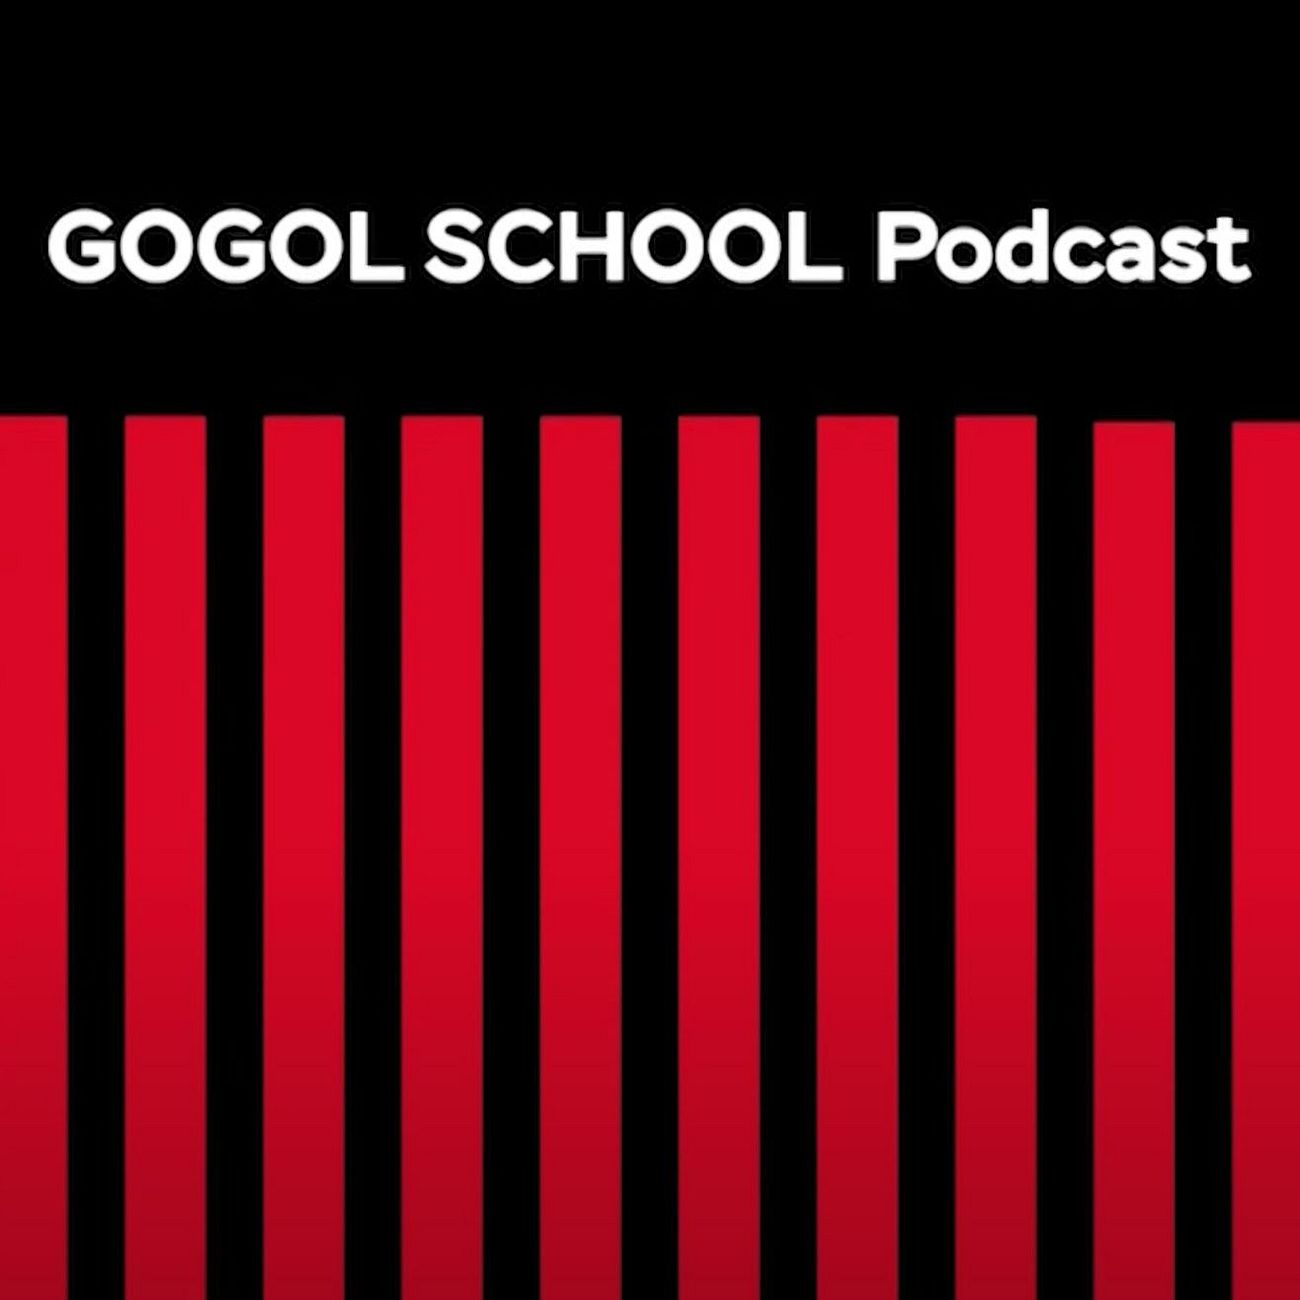 Gogol School podcast